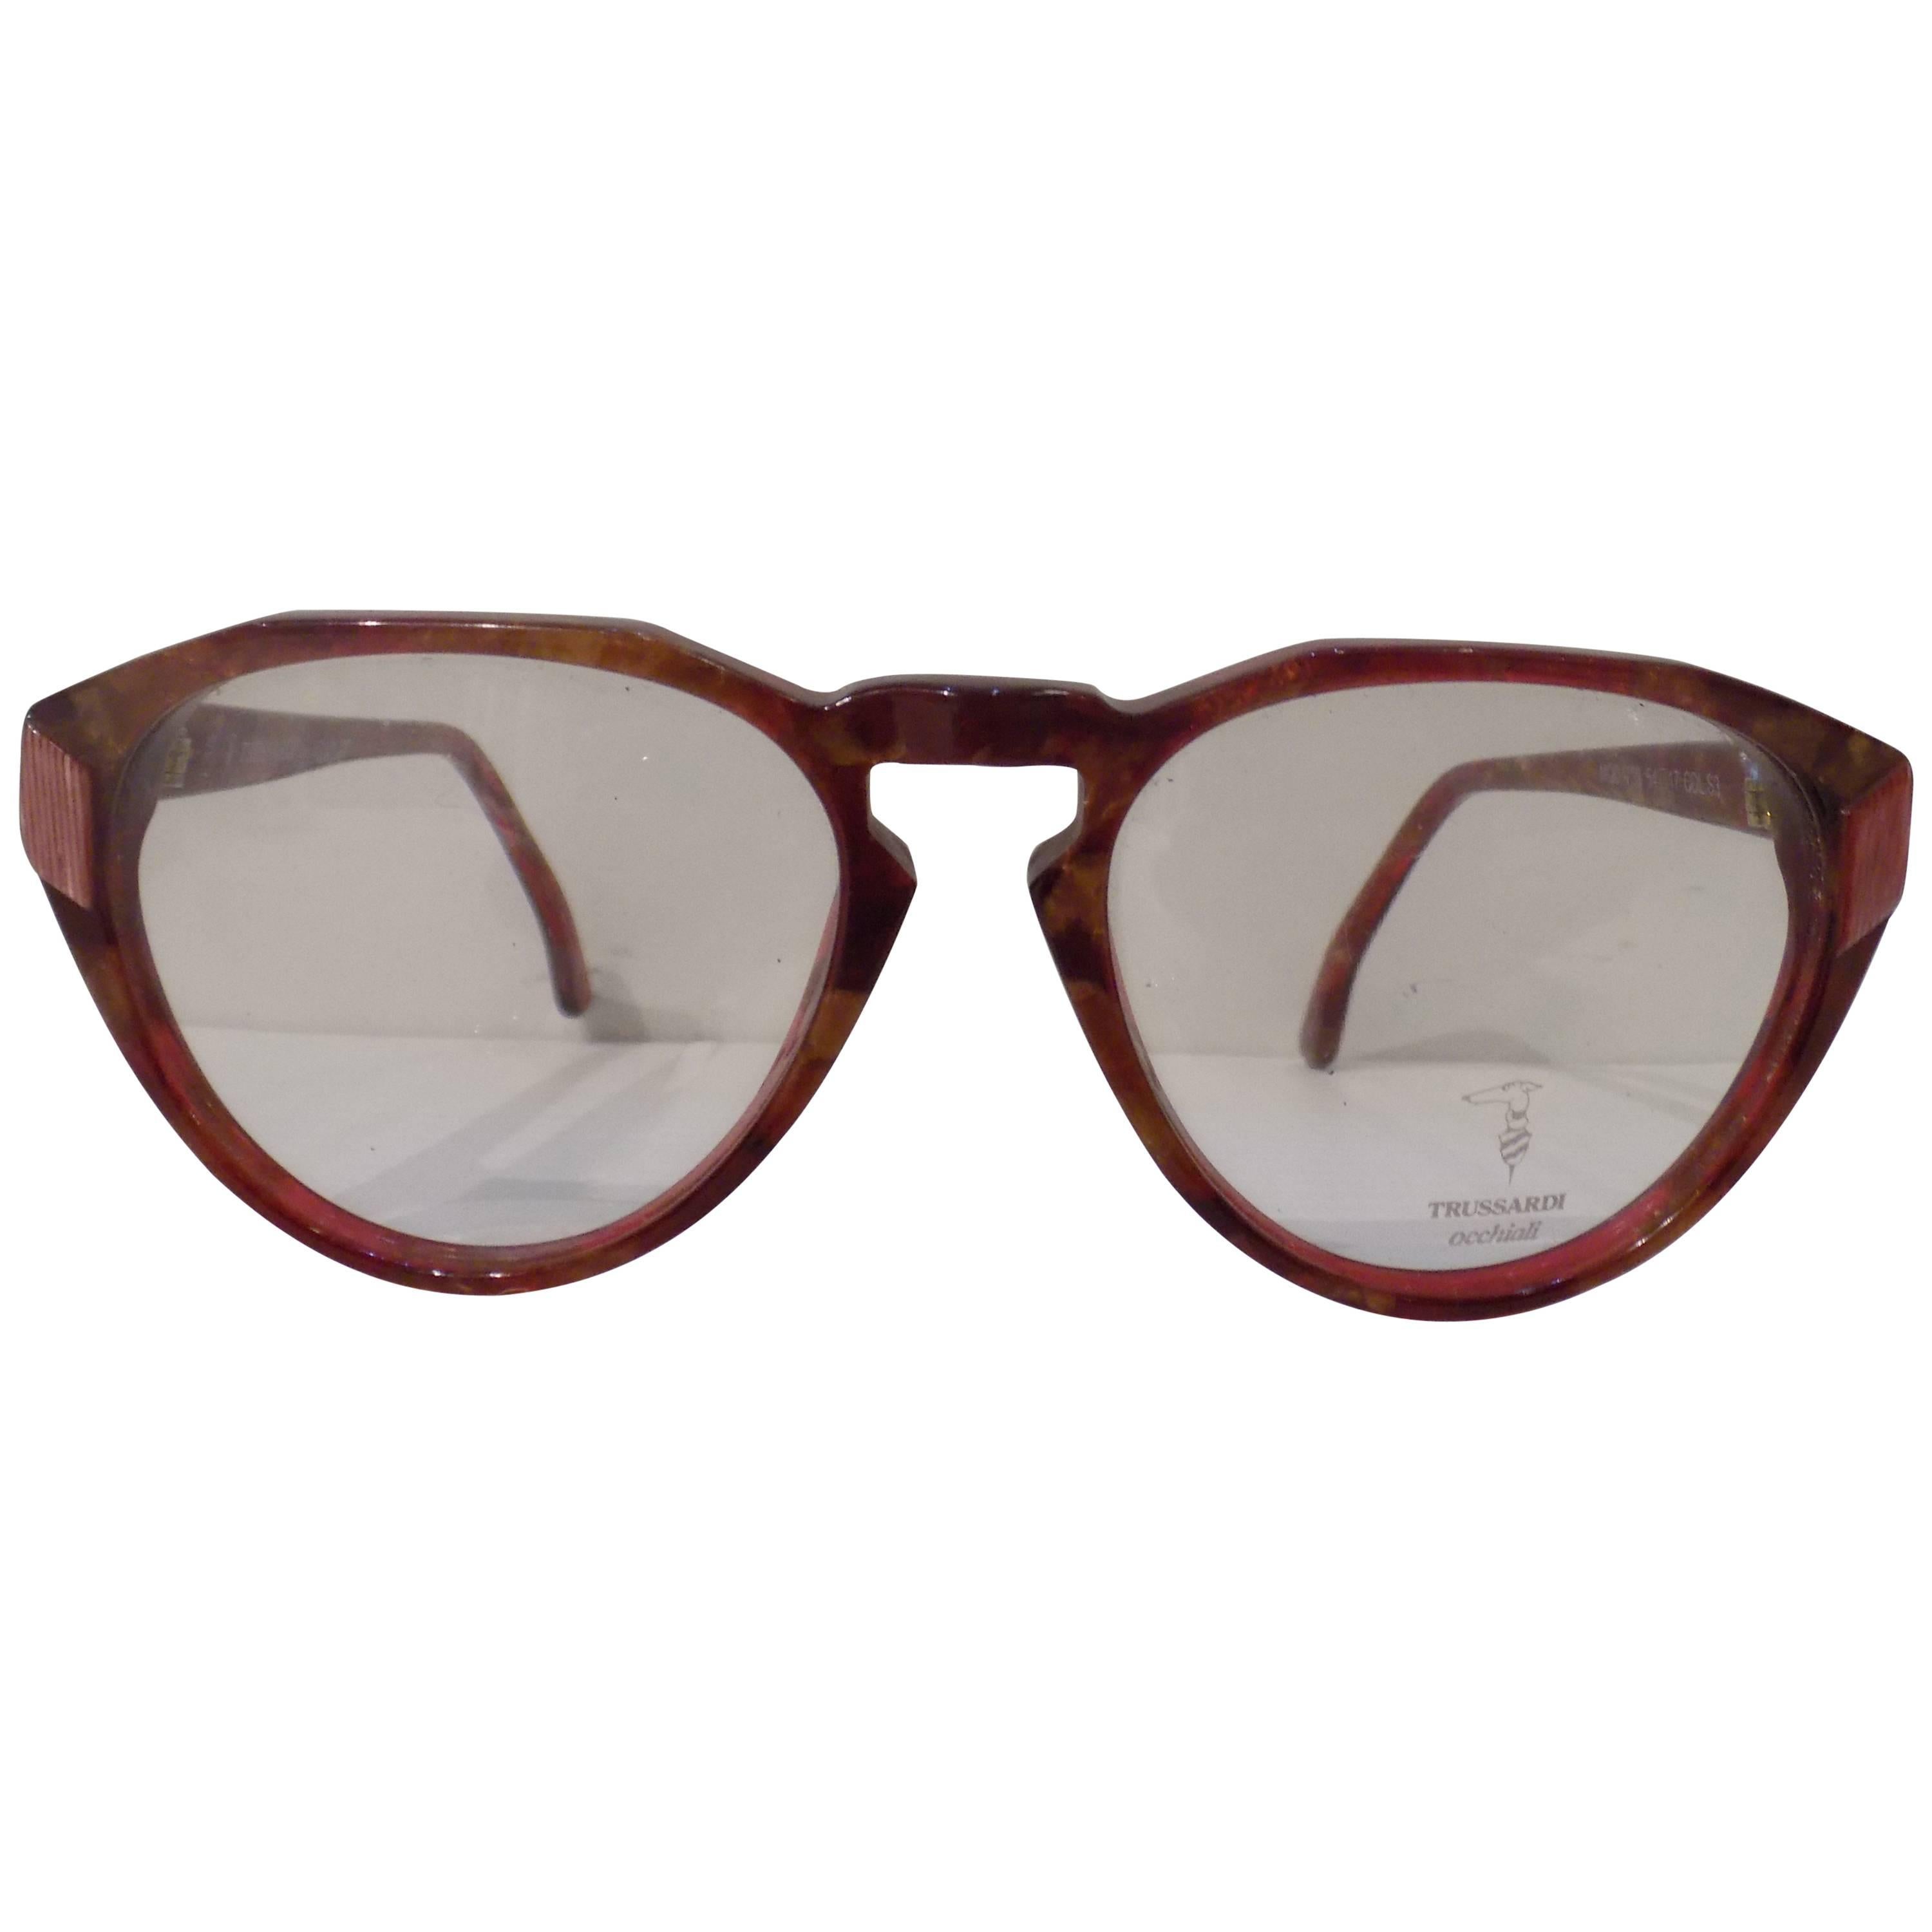 1990s Trussardi brown glasses frame